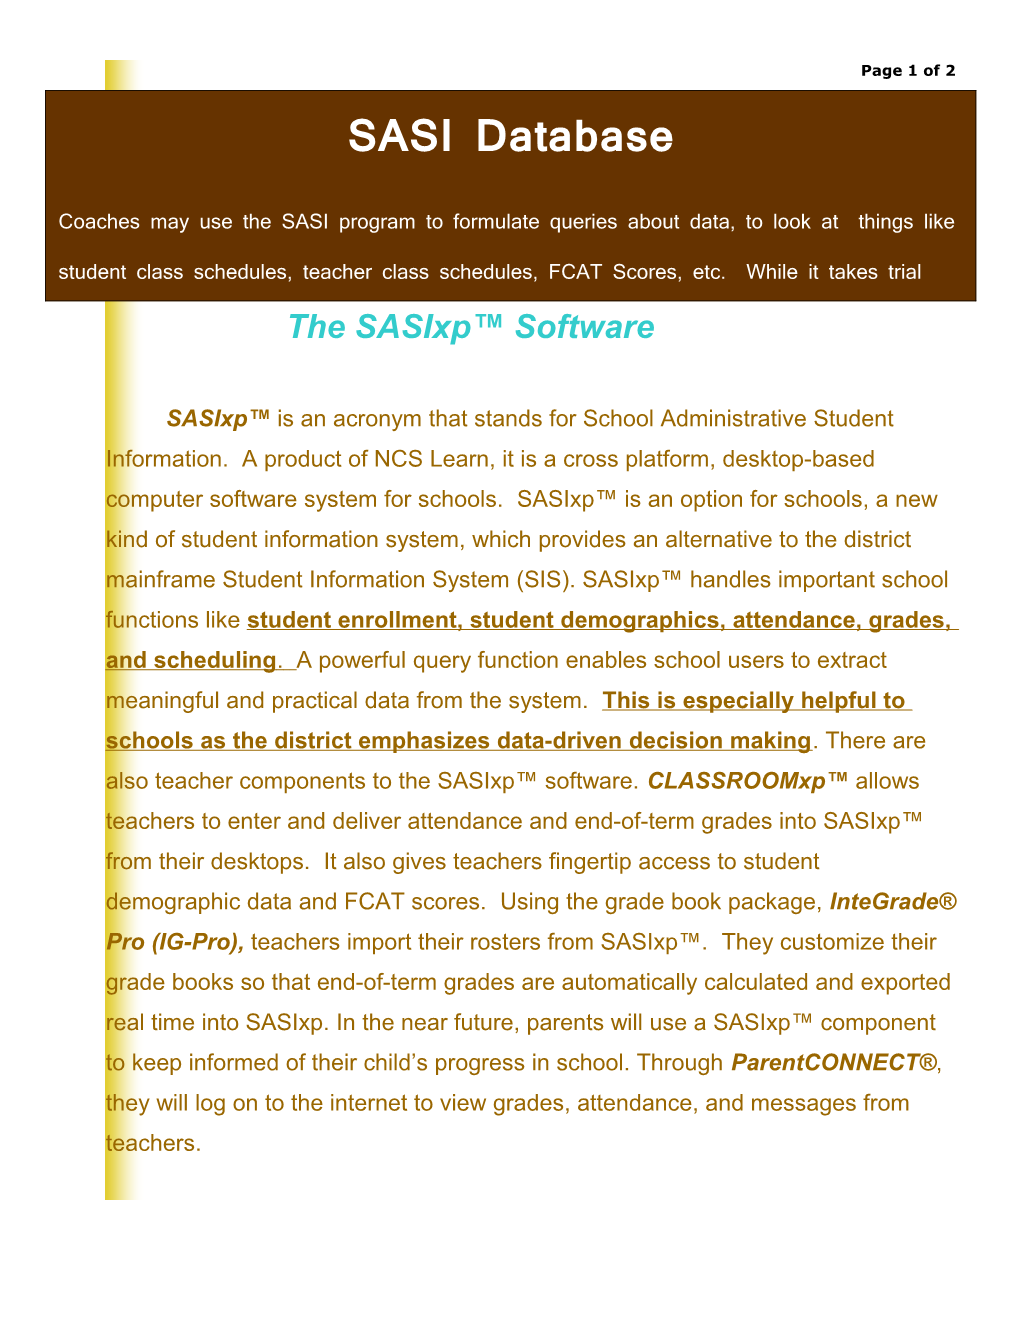 The Sasixp Software